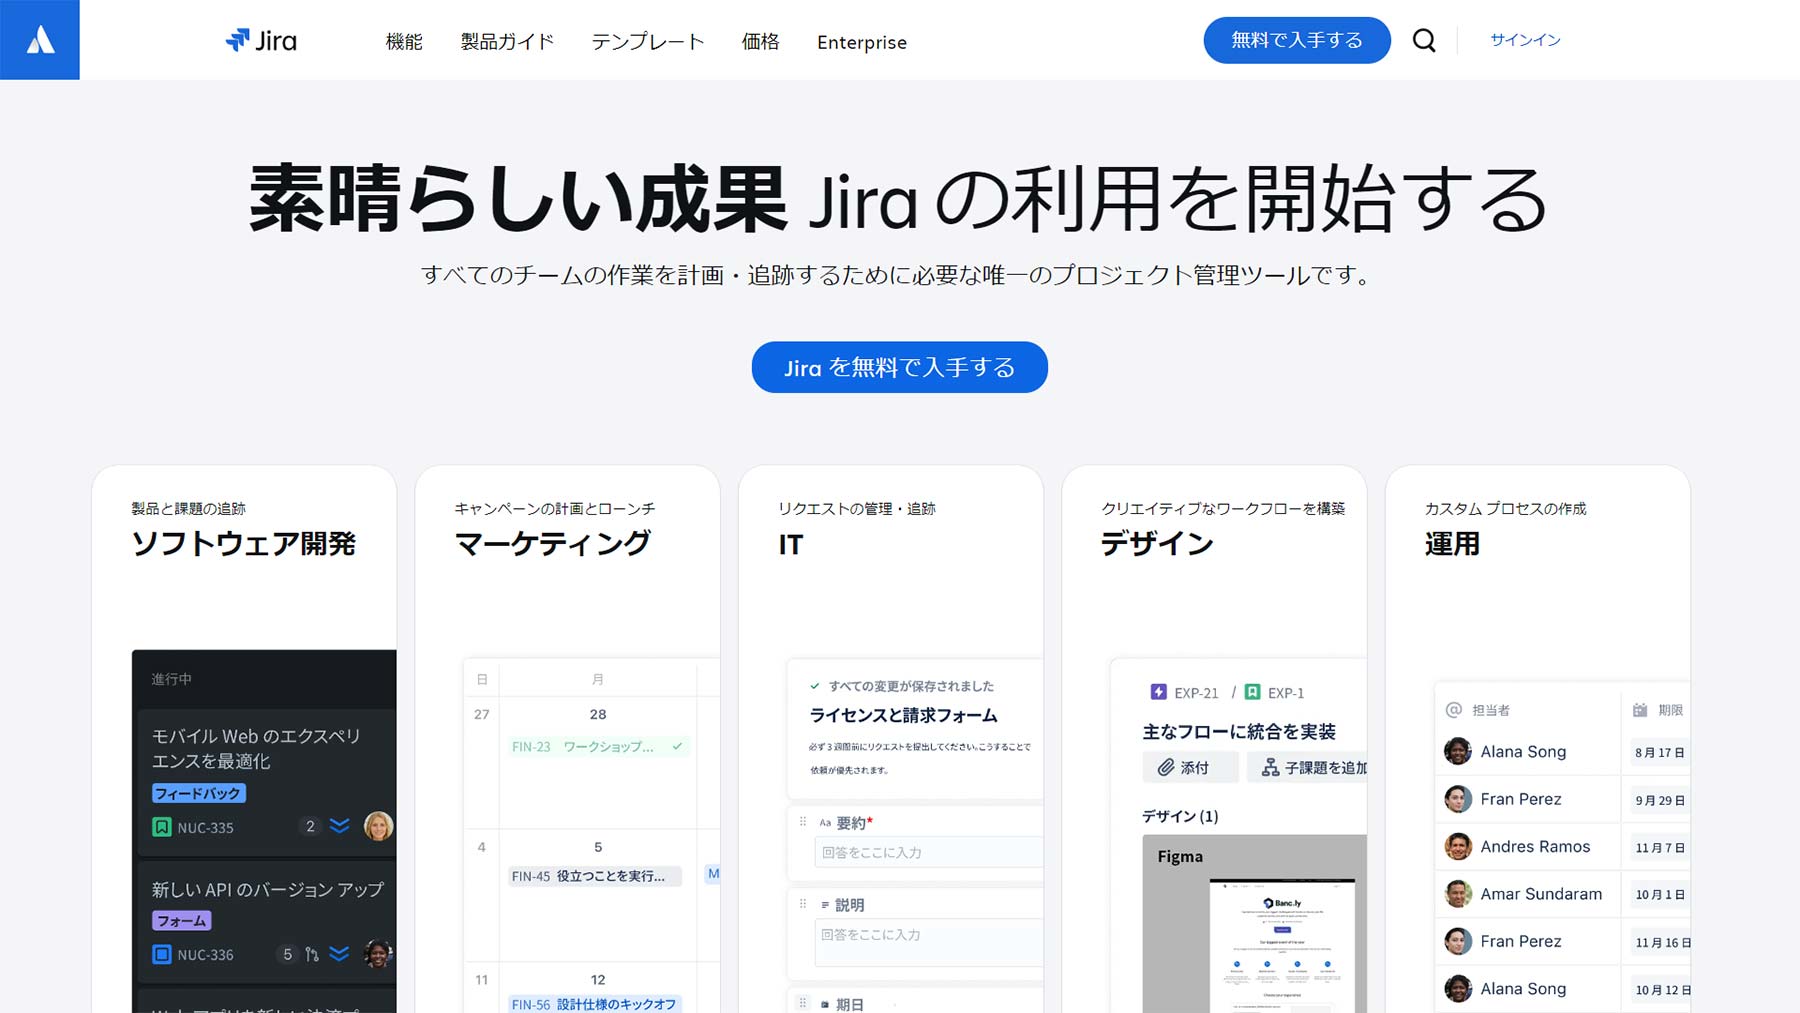 Jira公式Webサイト